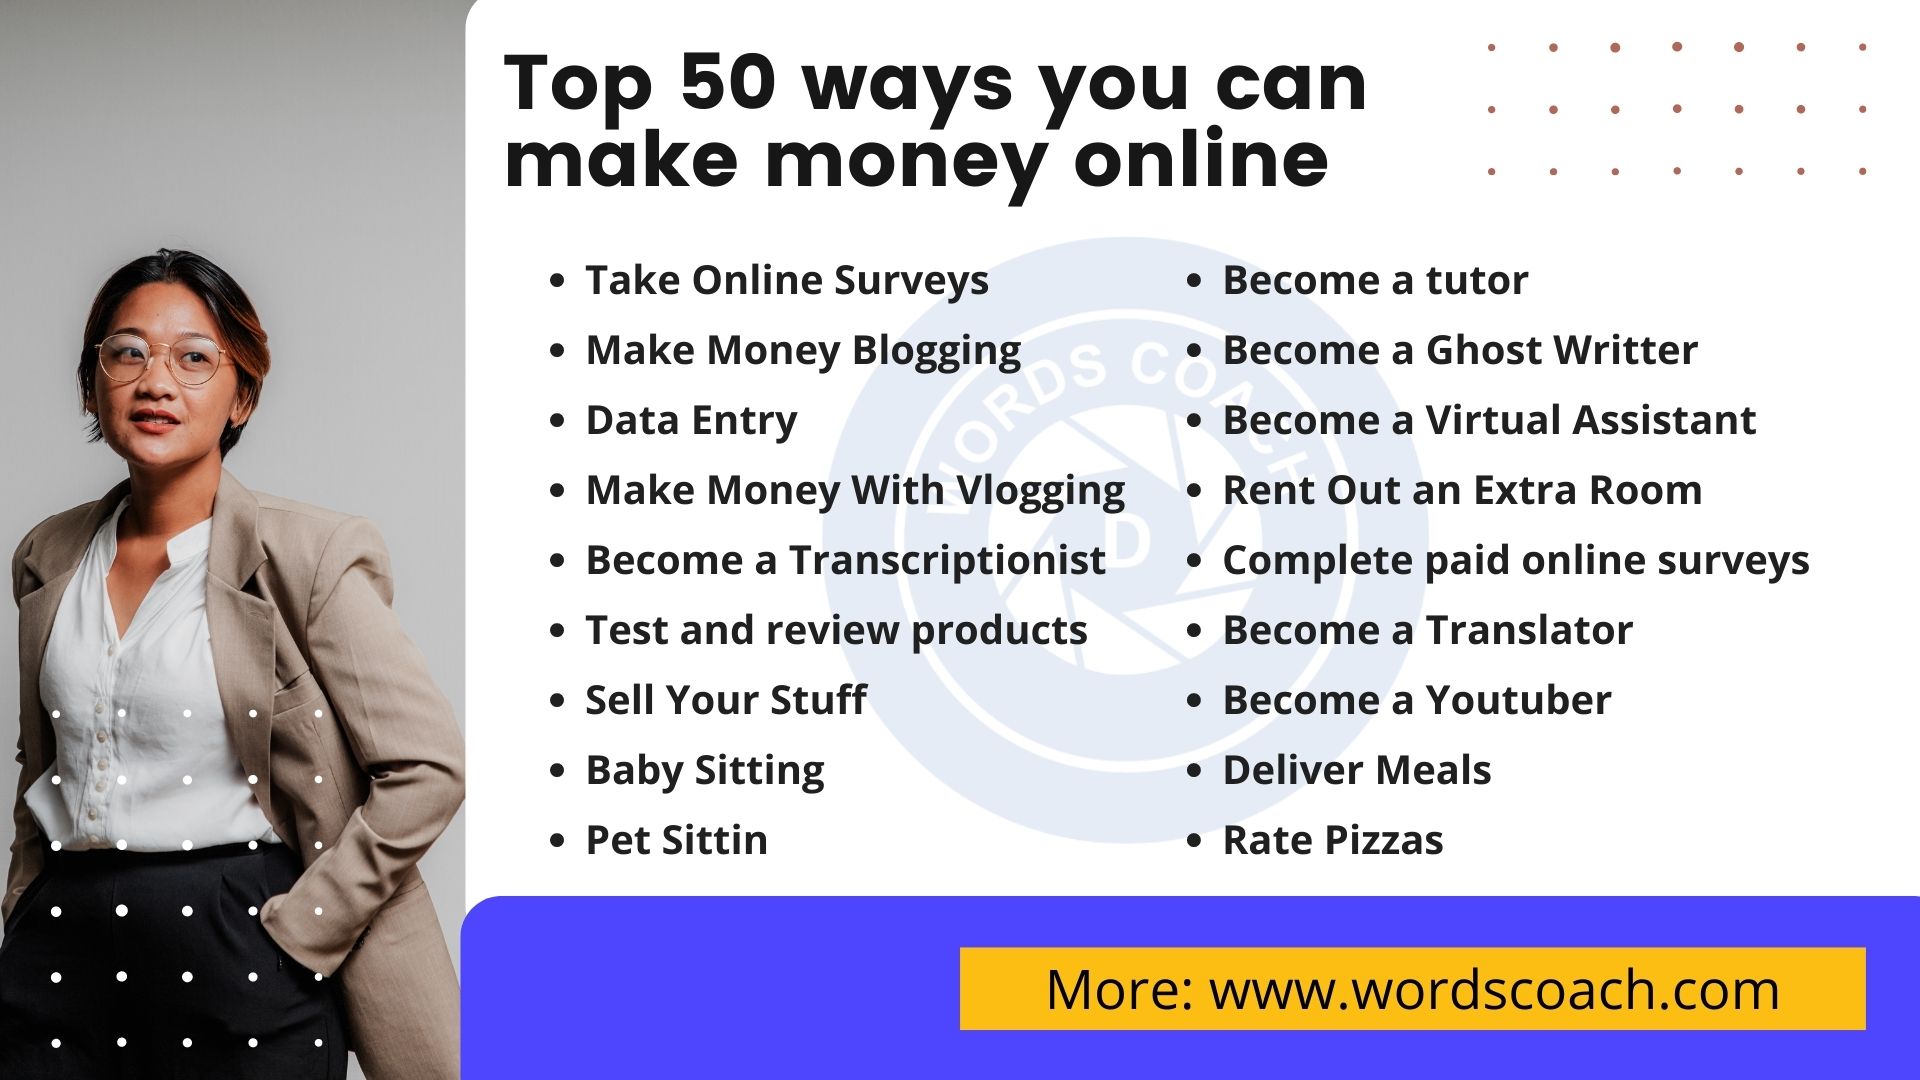 Top 50 ways you can make money online - wordscoach.com